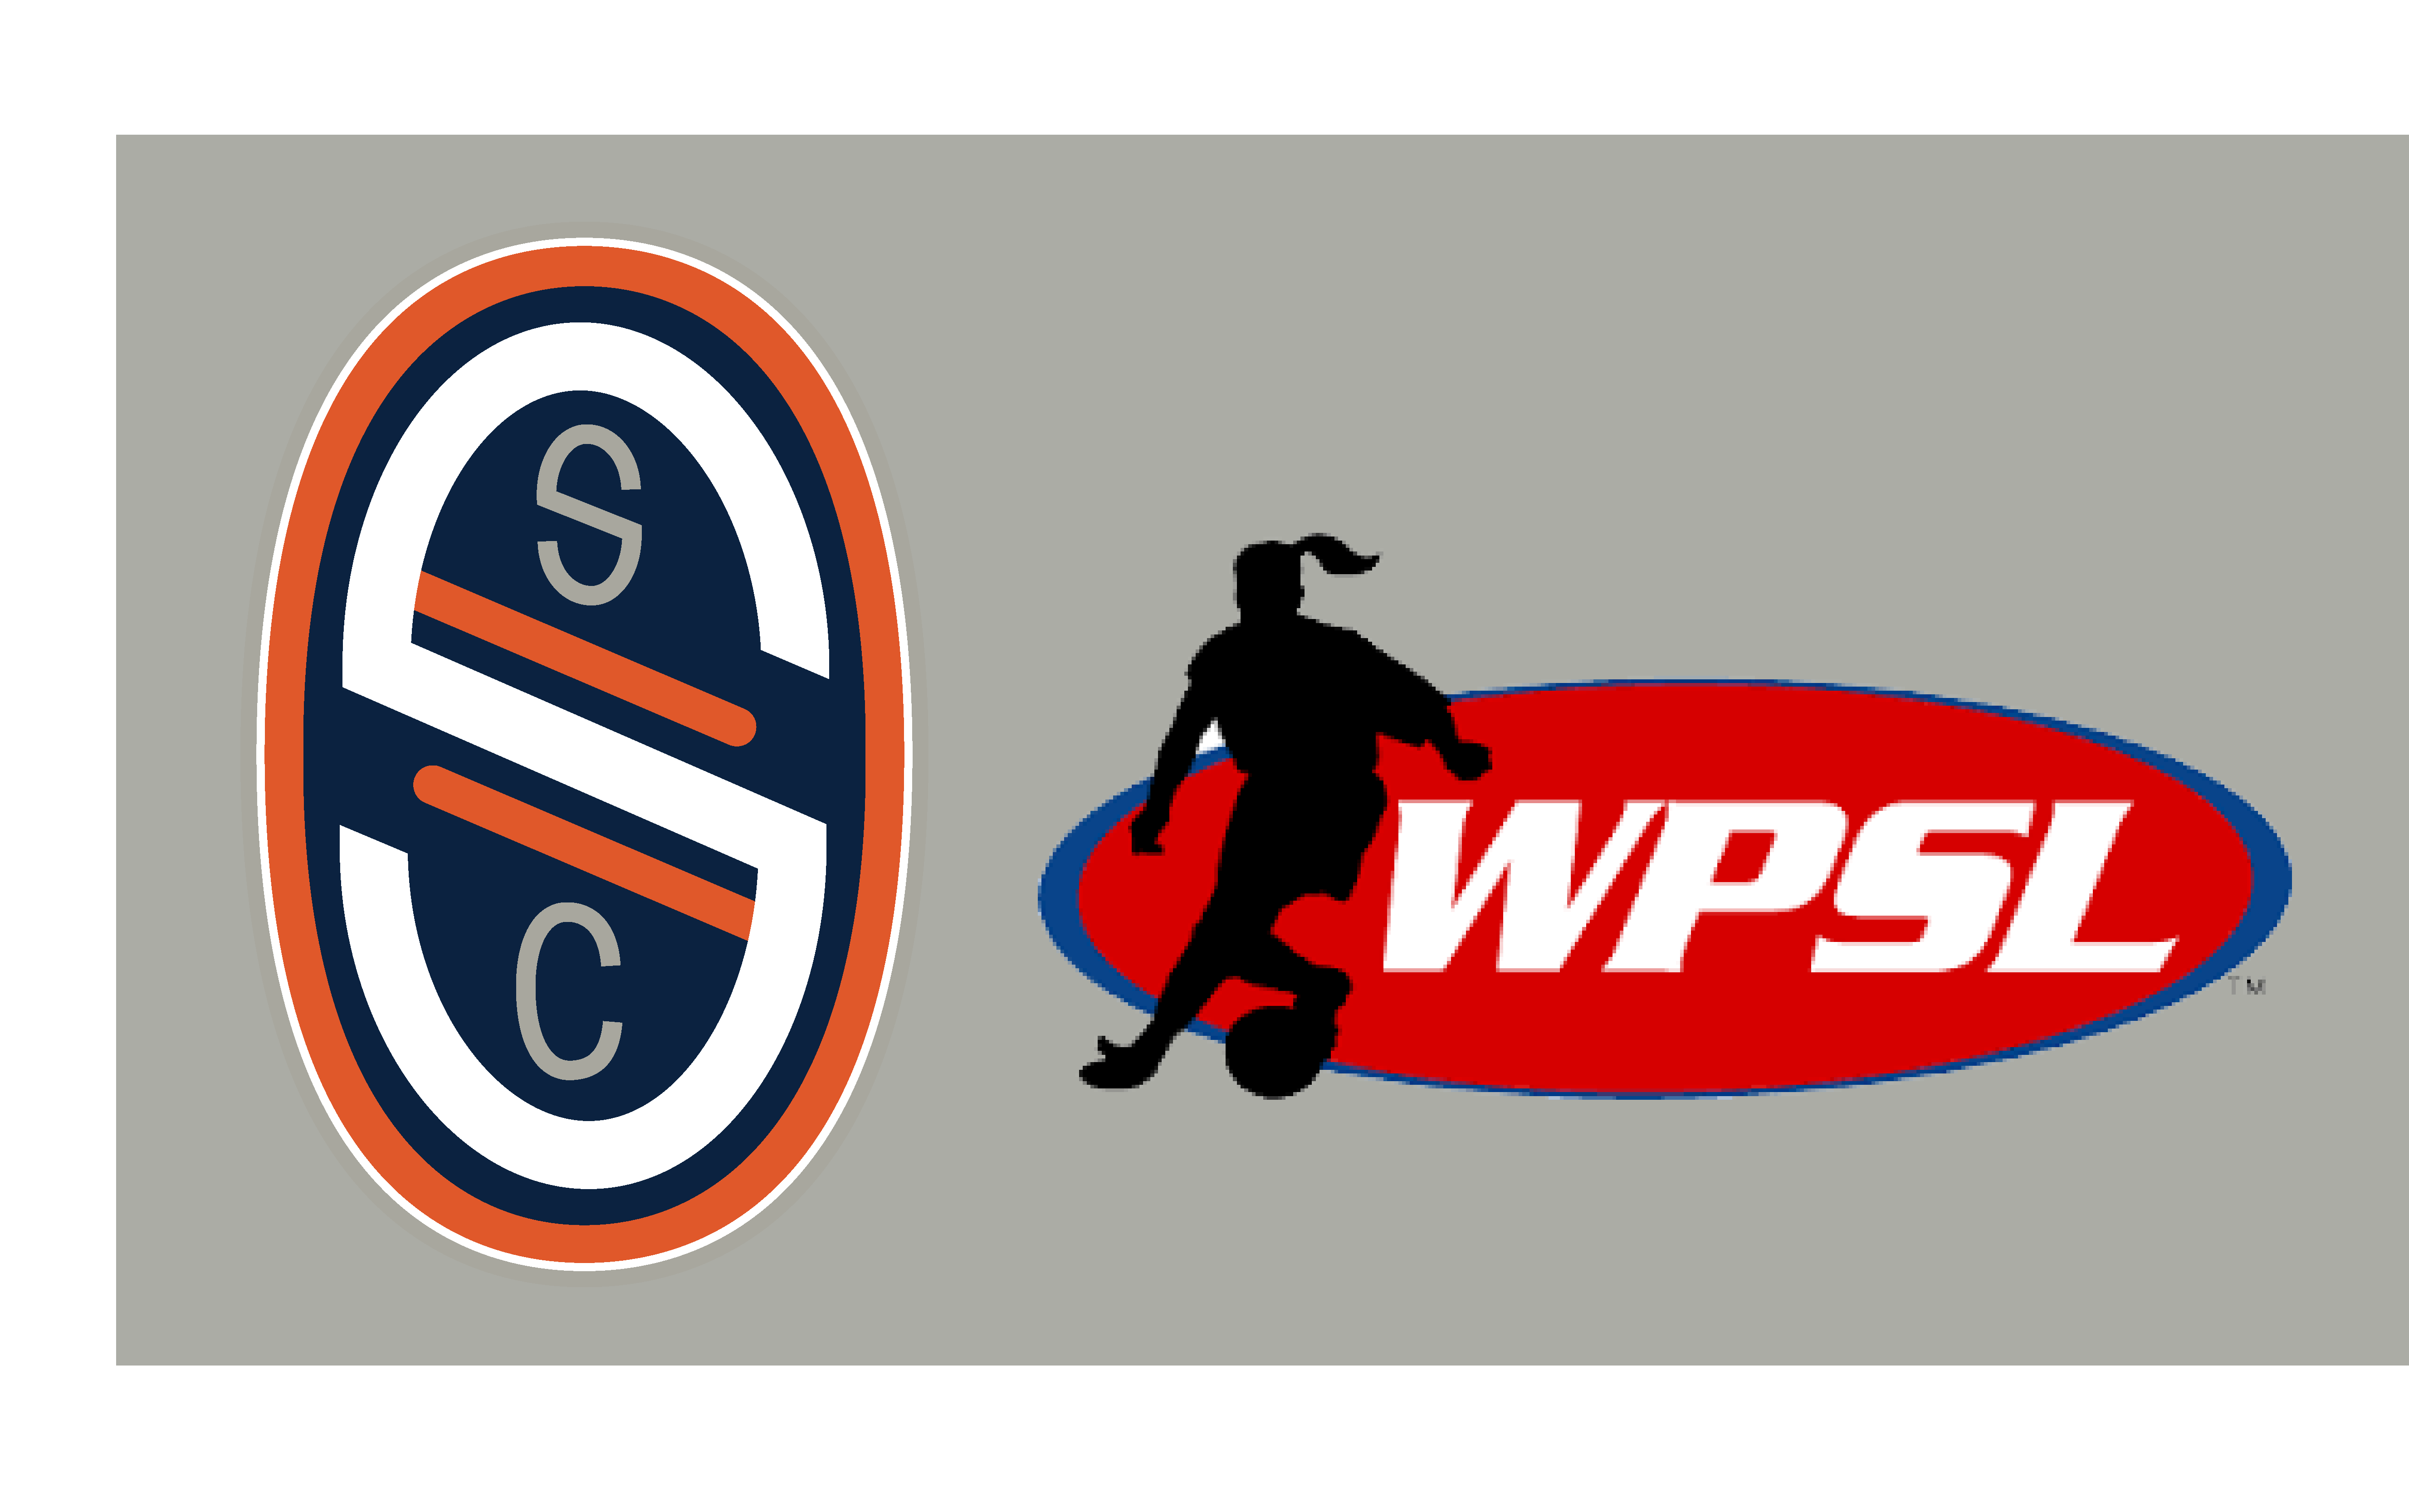 2019 SALVO SC WPSL Season Tickets and Single Game Tickets